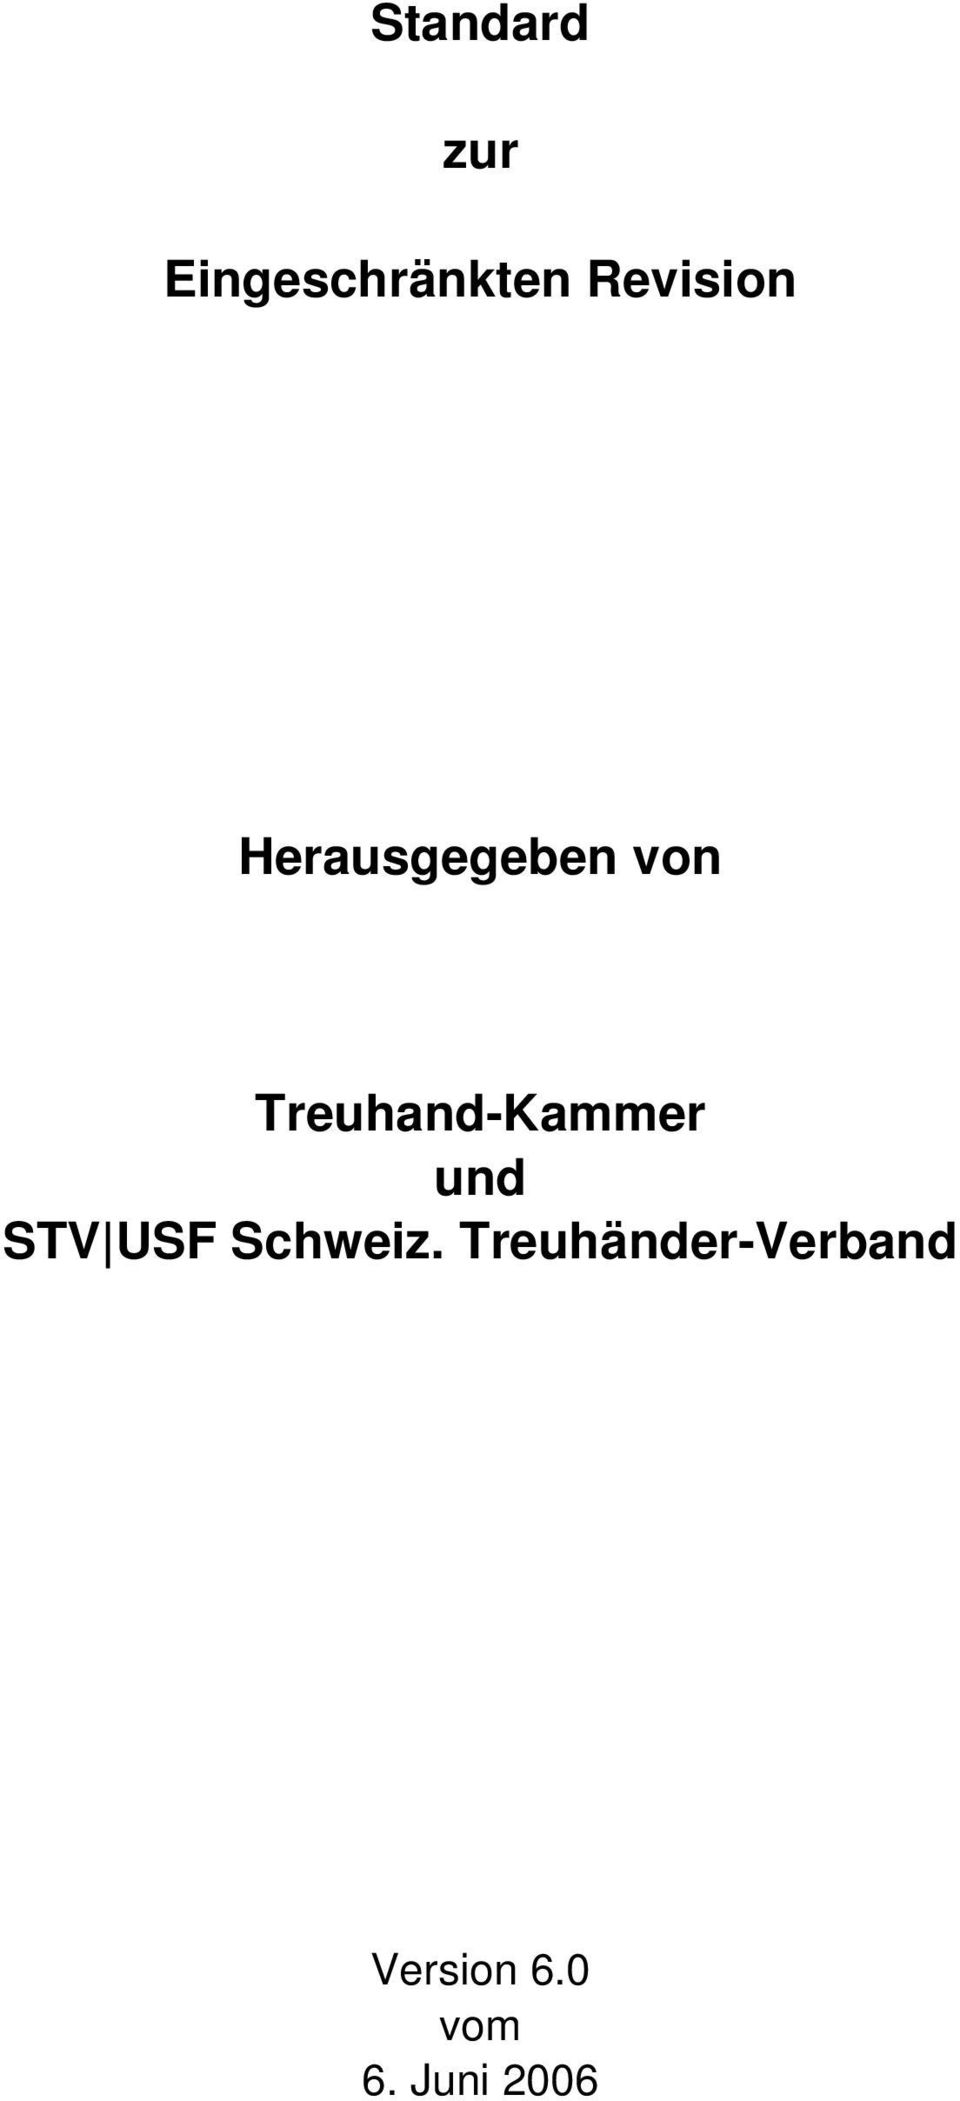 Treuhand-Kammer und STV USF